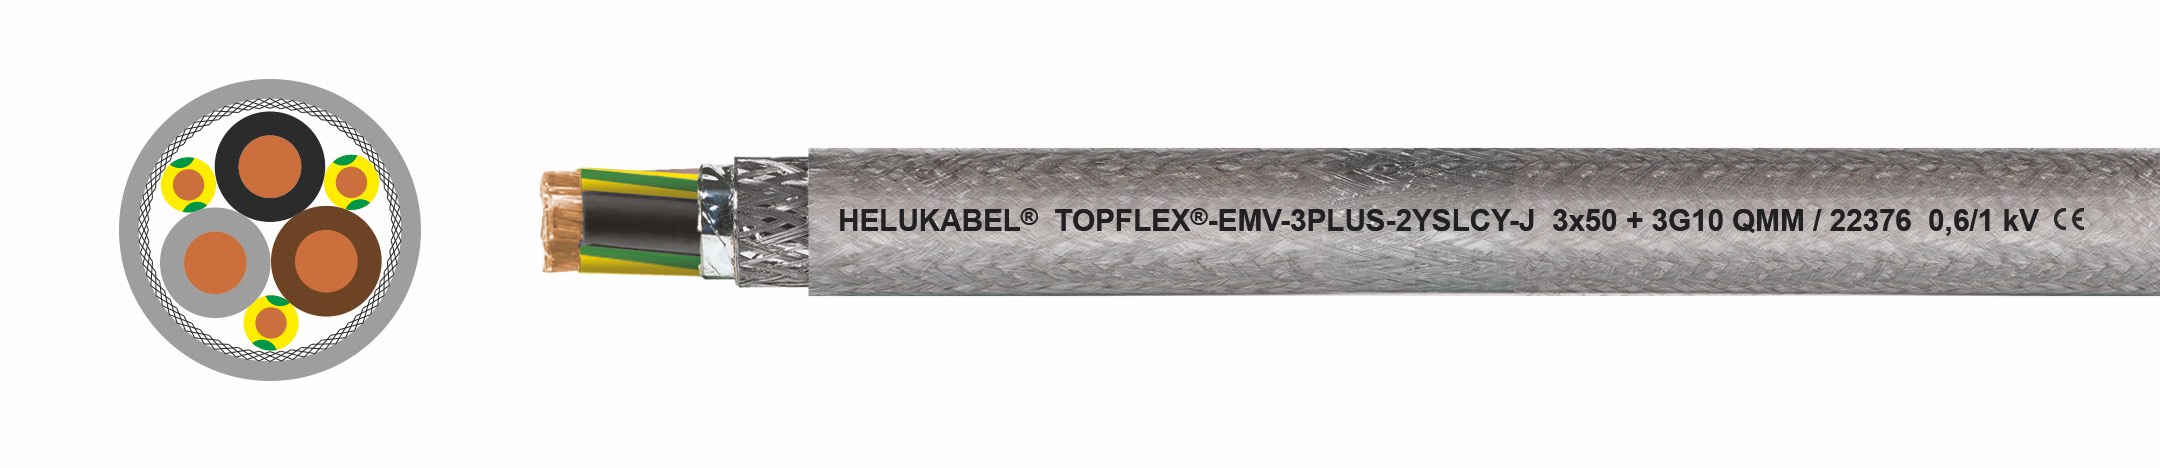 Cable Helukabel: TOPFLEX®-EMV-3-PLUS-2YSLCY-J